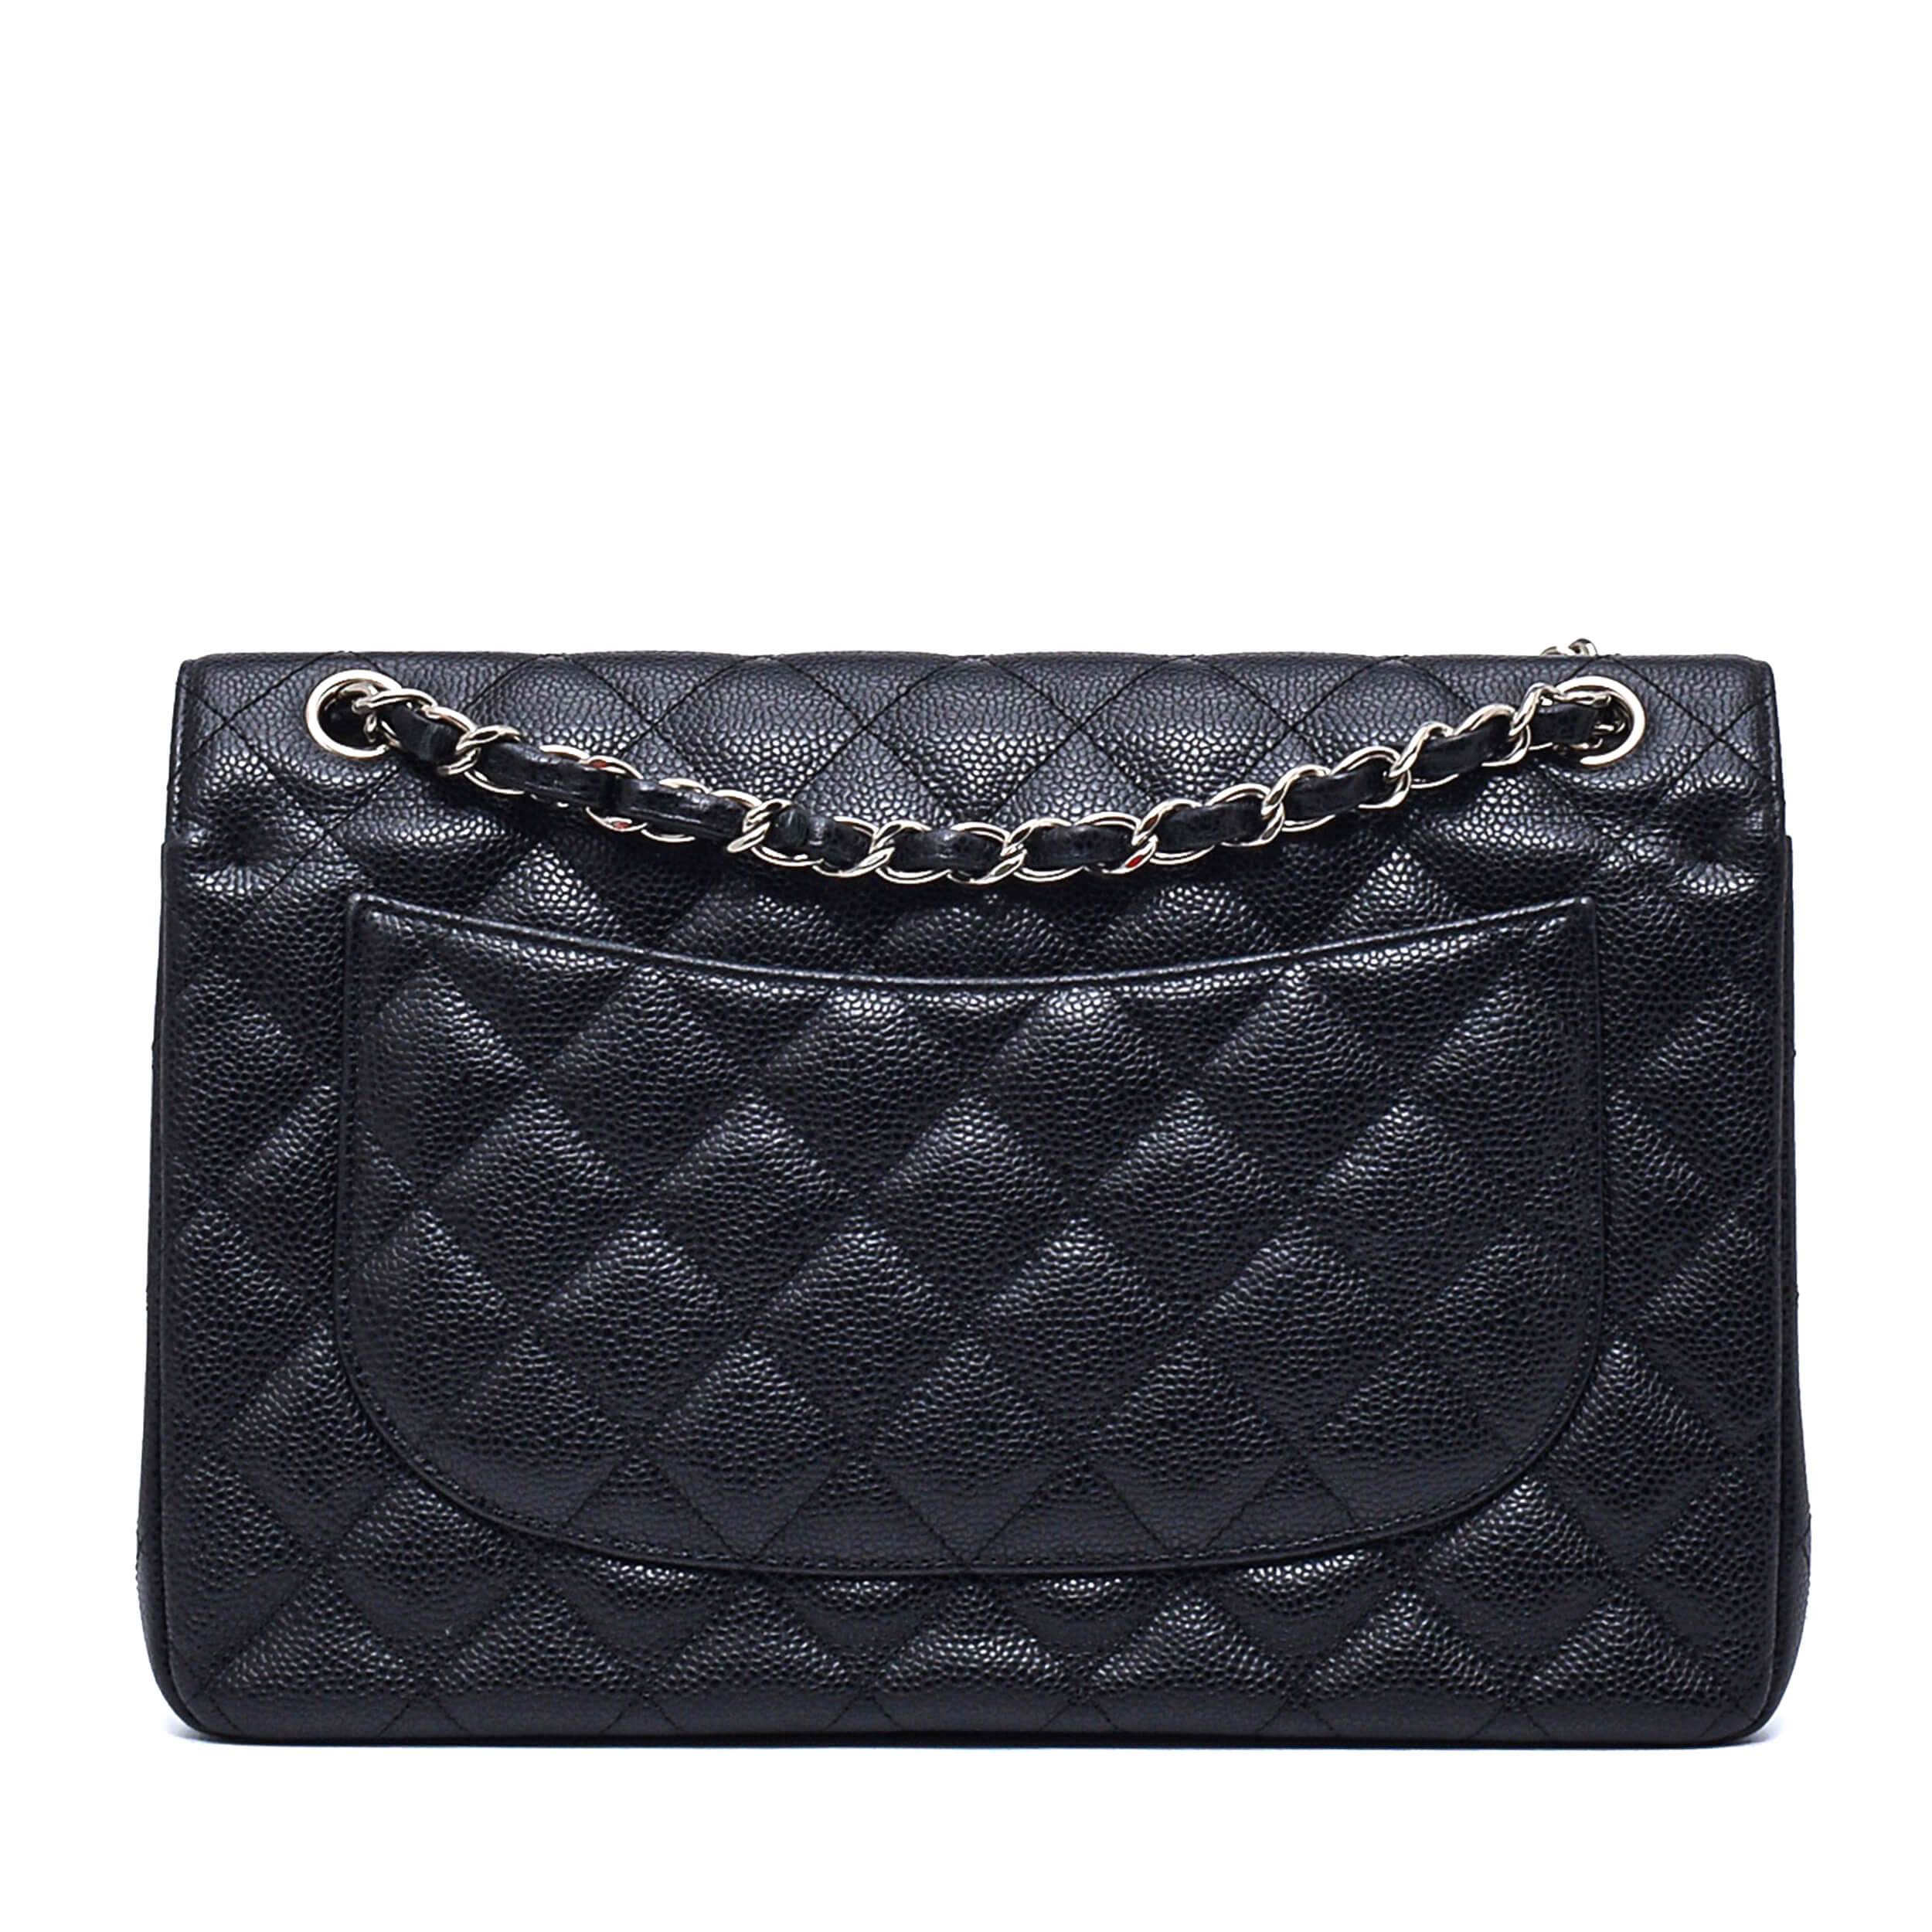 Chanel- Black Caviar Leather Jumbo Doubl Flap Bag